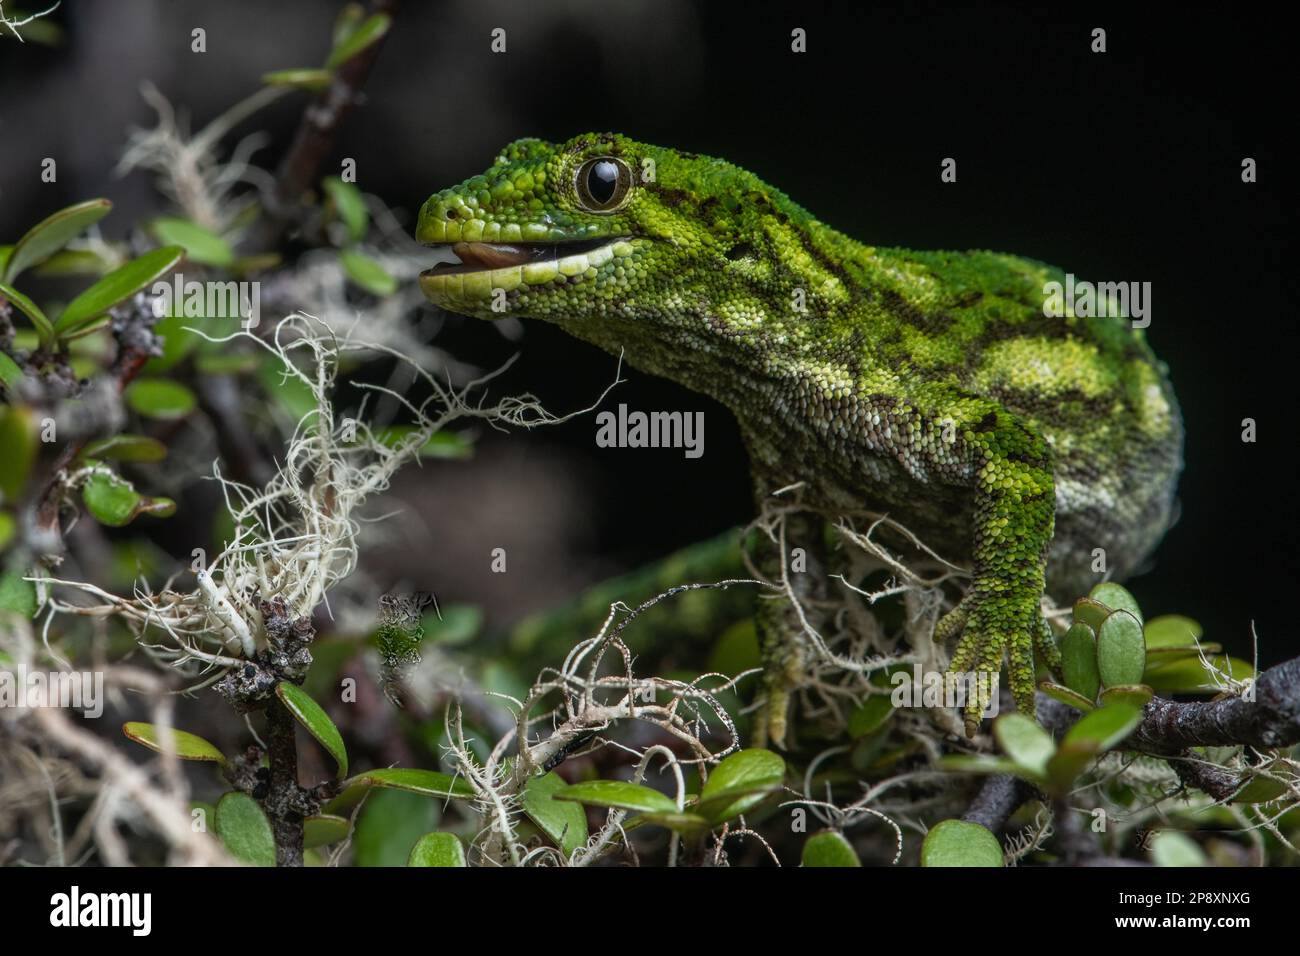 A close up portrait of a rough gecko (Naultinus rudis) endemic to Aotearoa New Zealand. Stock Photo